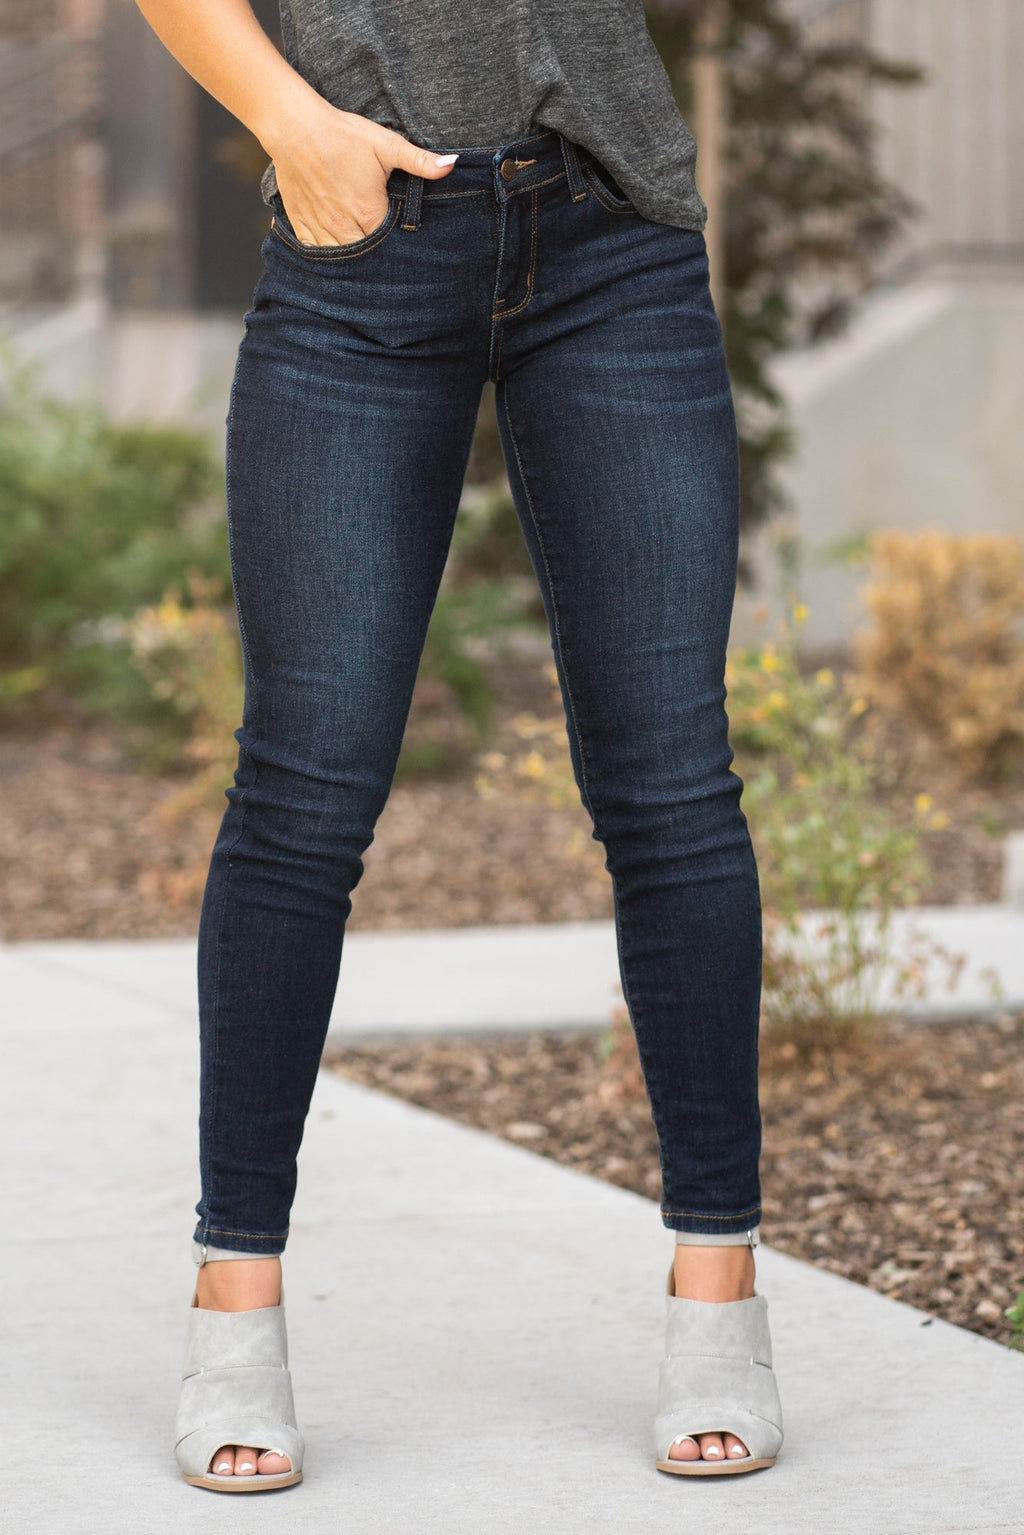 J Brand Earnest Sewn Womens Mid Rise Skinny Jeans Skirt Blue Gray Size -  Shop Linda's Stuff